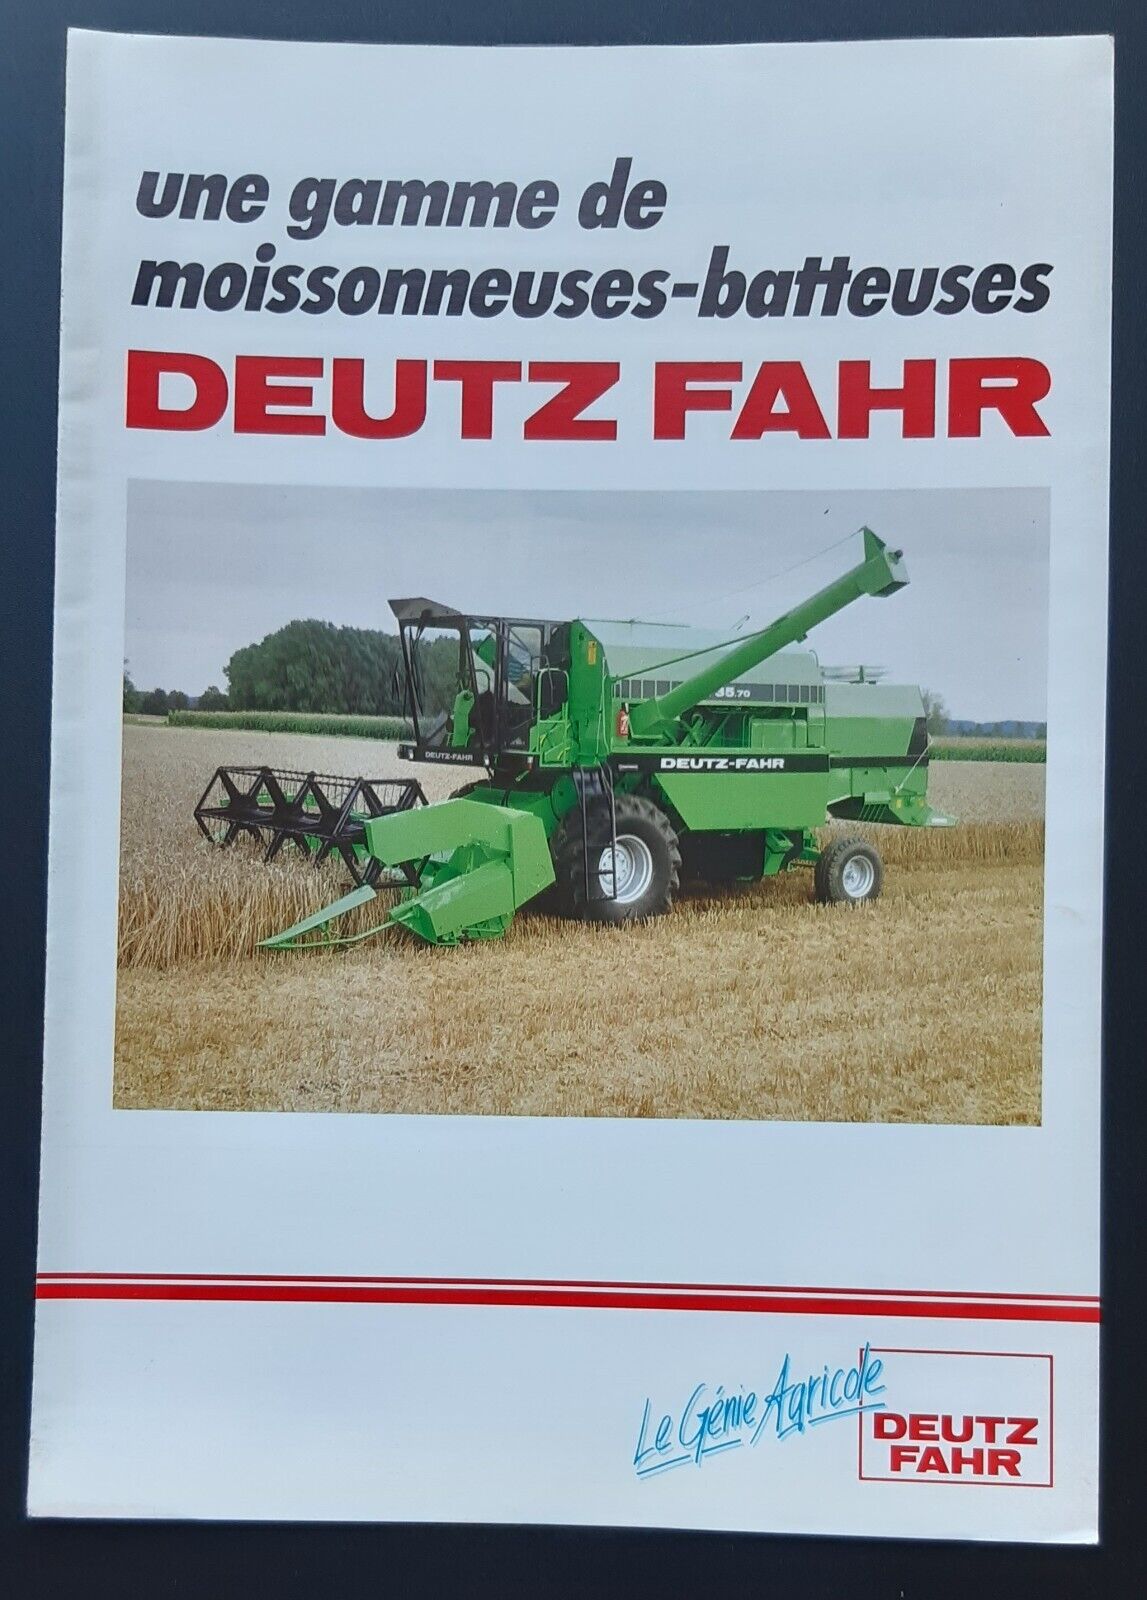 Prospectus tractor brochure Deutz Fahr combine harvester 21x30cm 2 pages